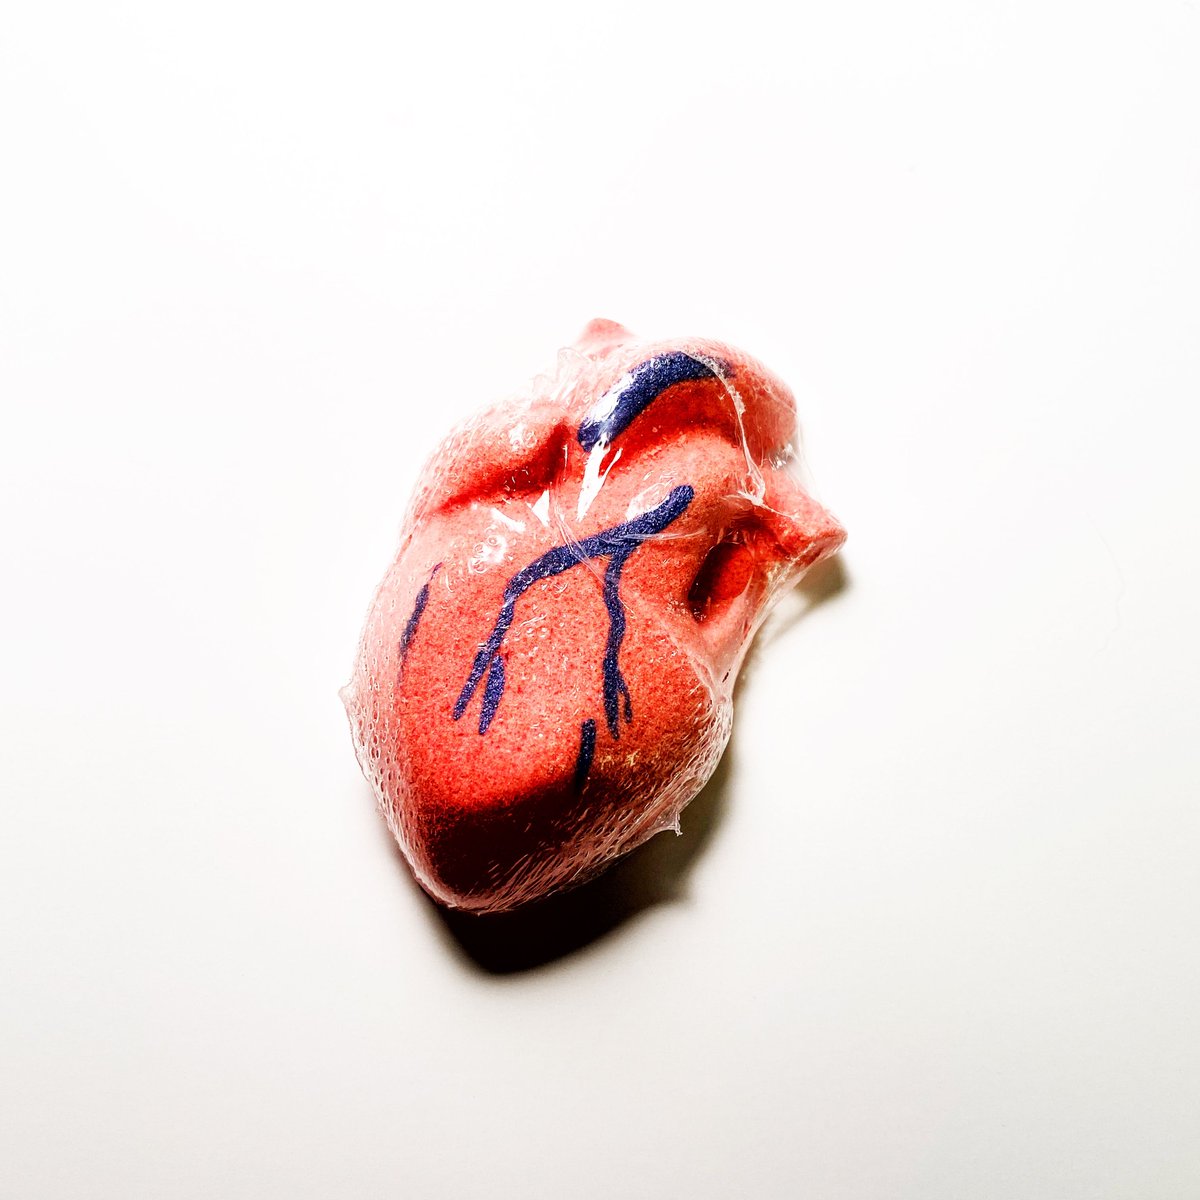 This anatomical heart will show your valentine how you really feel about them!
magpiebath.com/shop/valentines
#ldnont
#lndont
#asmrbathbomb
#tubclub
#bathblaster
#veganbathbomb
#bathbombsfordays
#bathfizzies
#crueltyfreeproducts
#bubblebar
#crueltyfreecosmetics
#vegancosmetics
#lushie